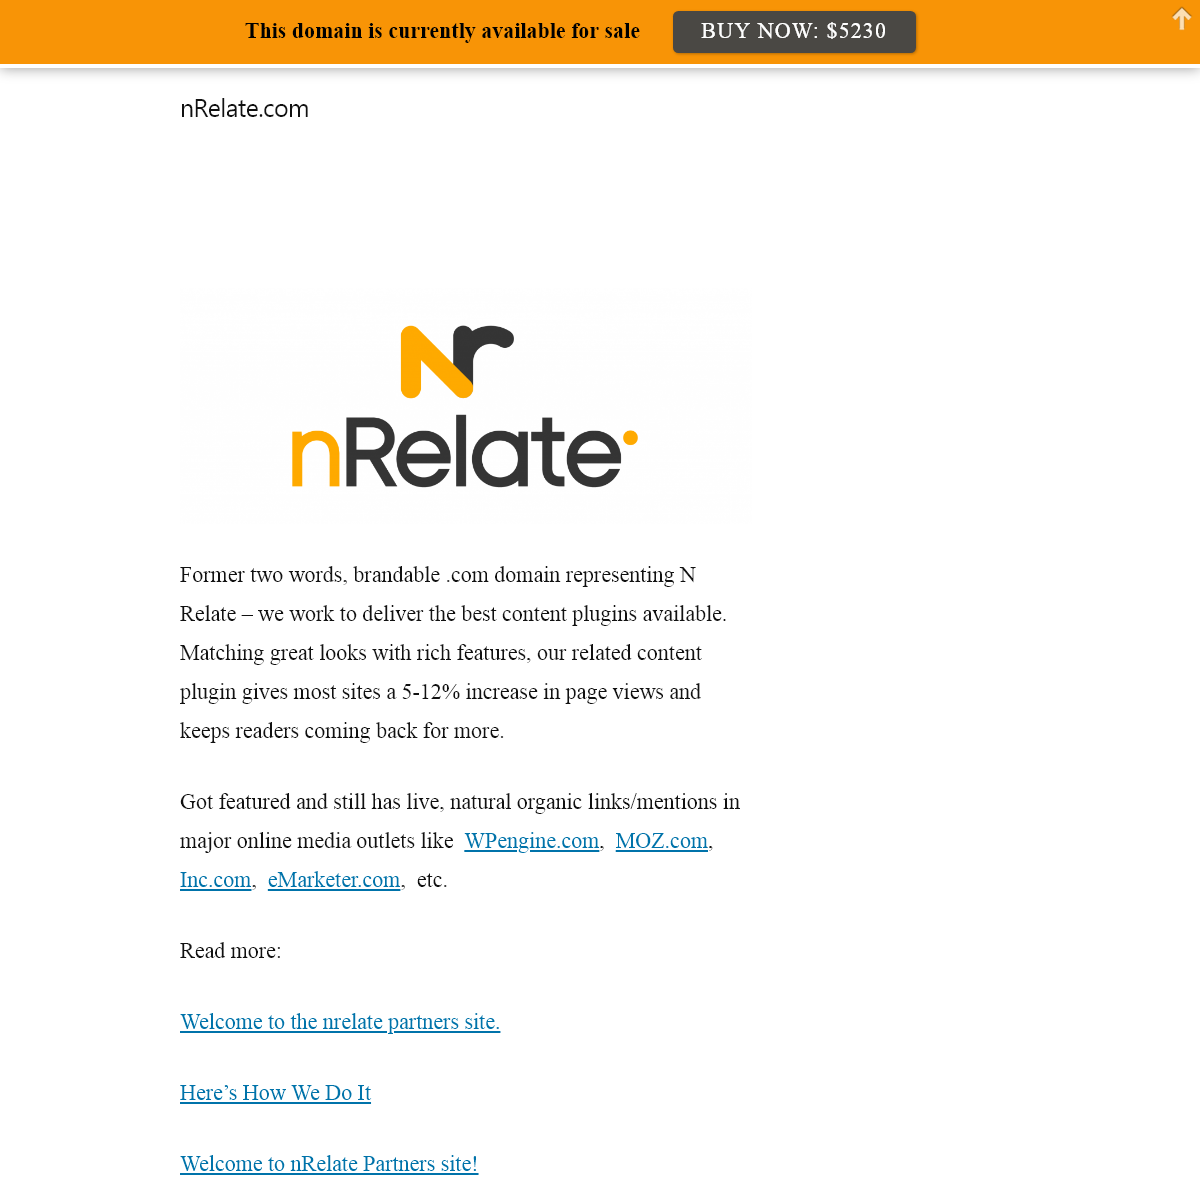 A complete backup of nrelate.com